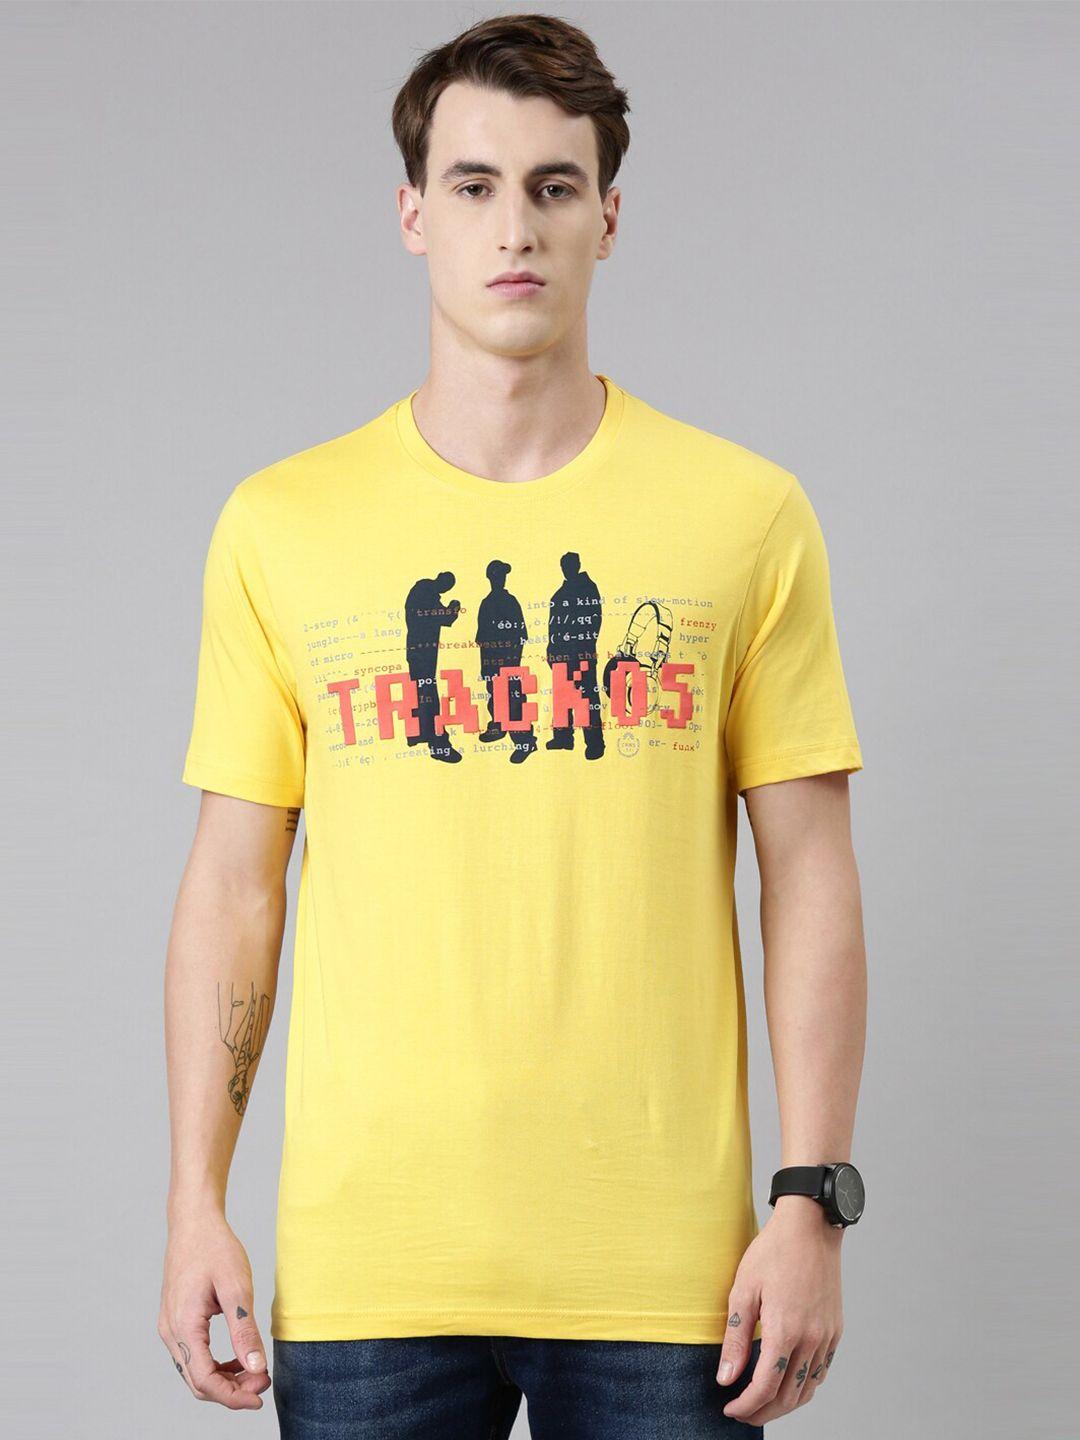 chennis men yellow typography printed cotton slim fit t-shirt